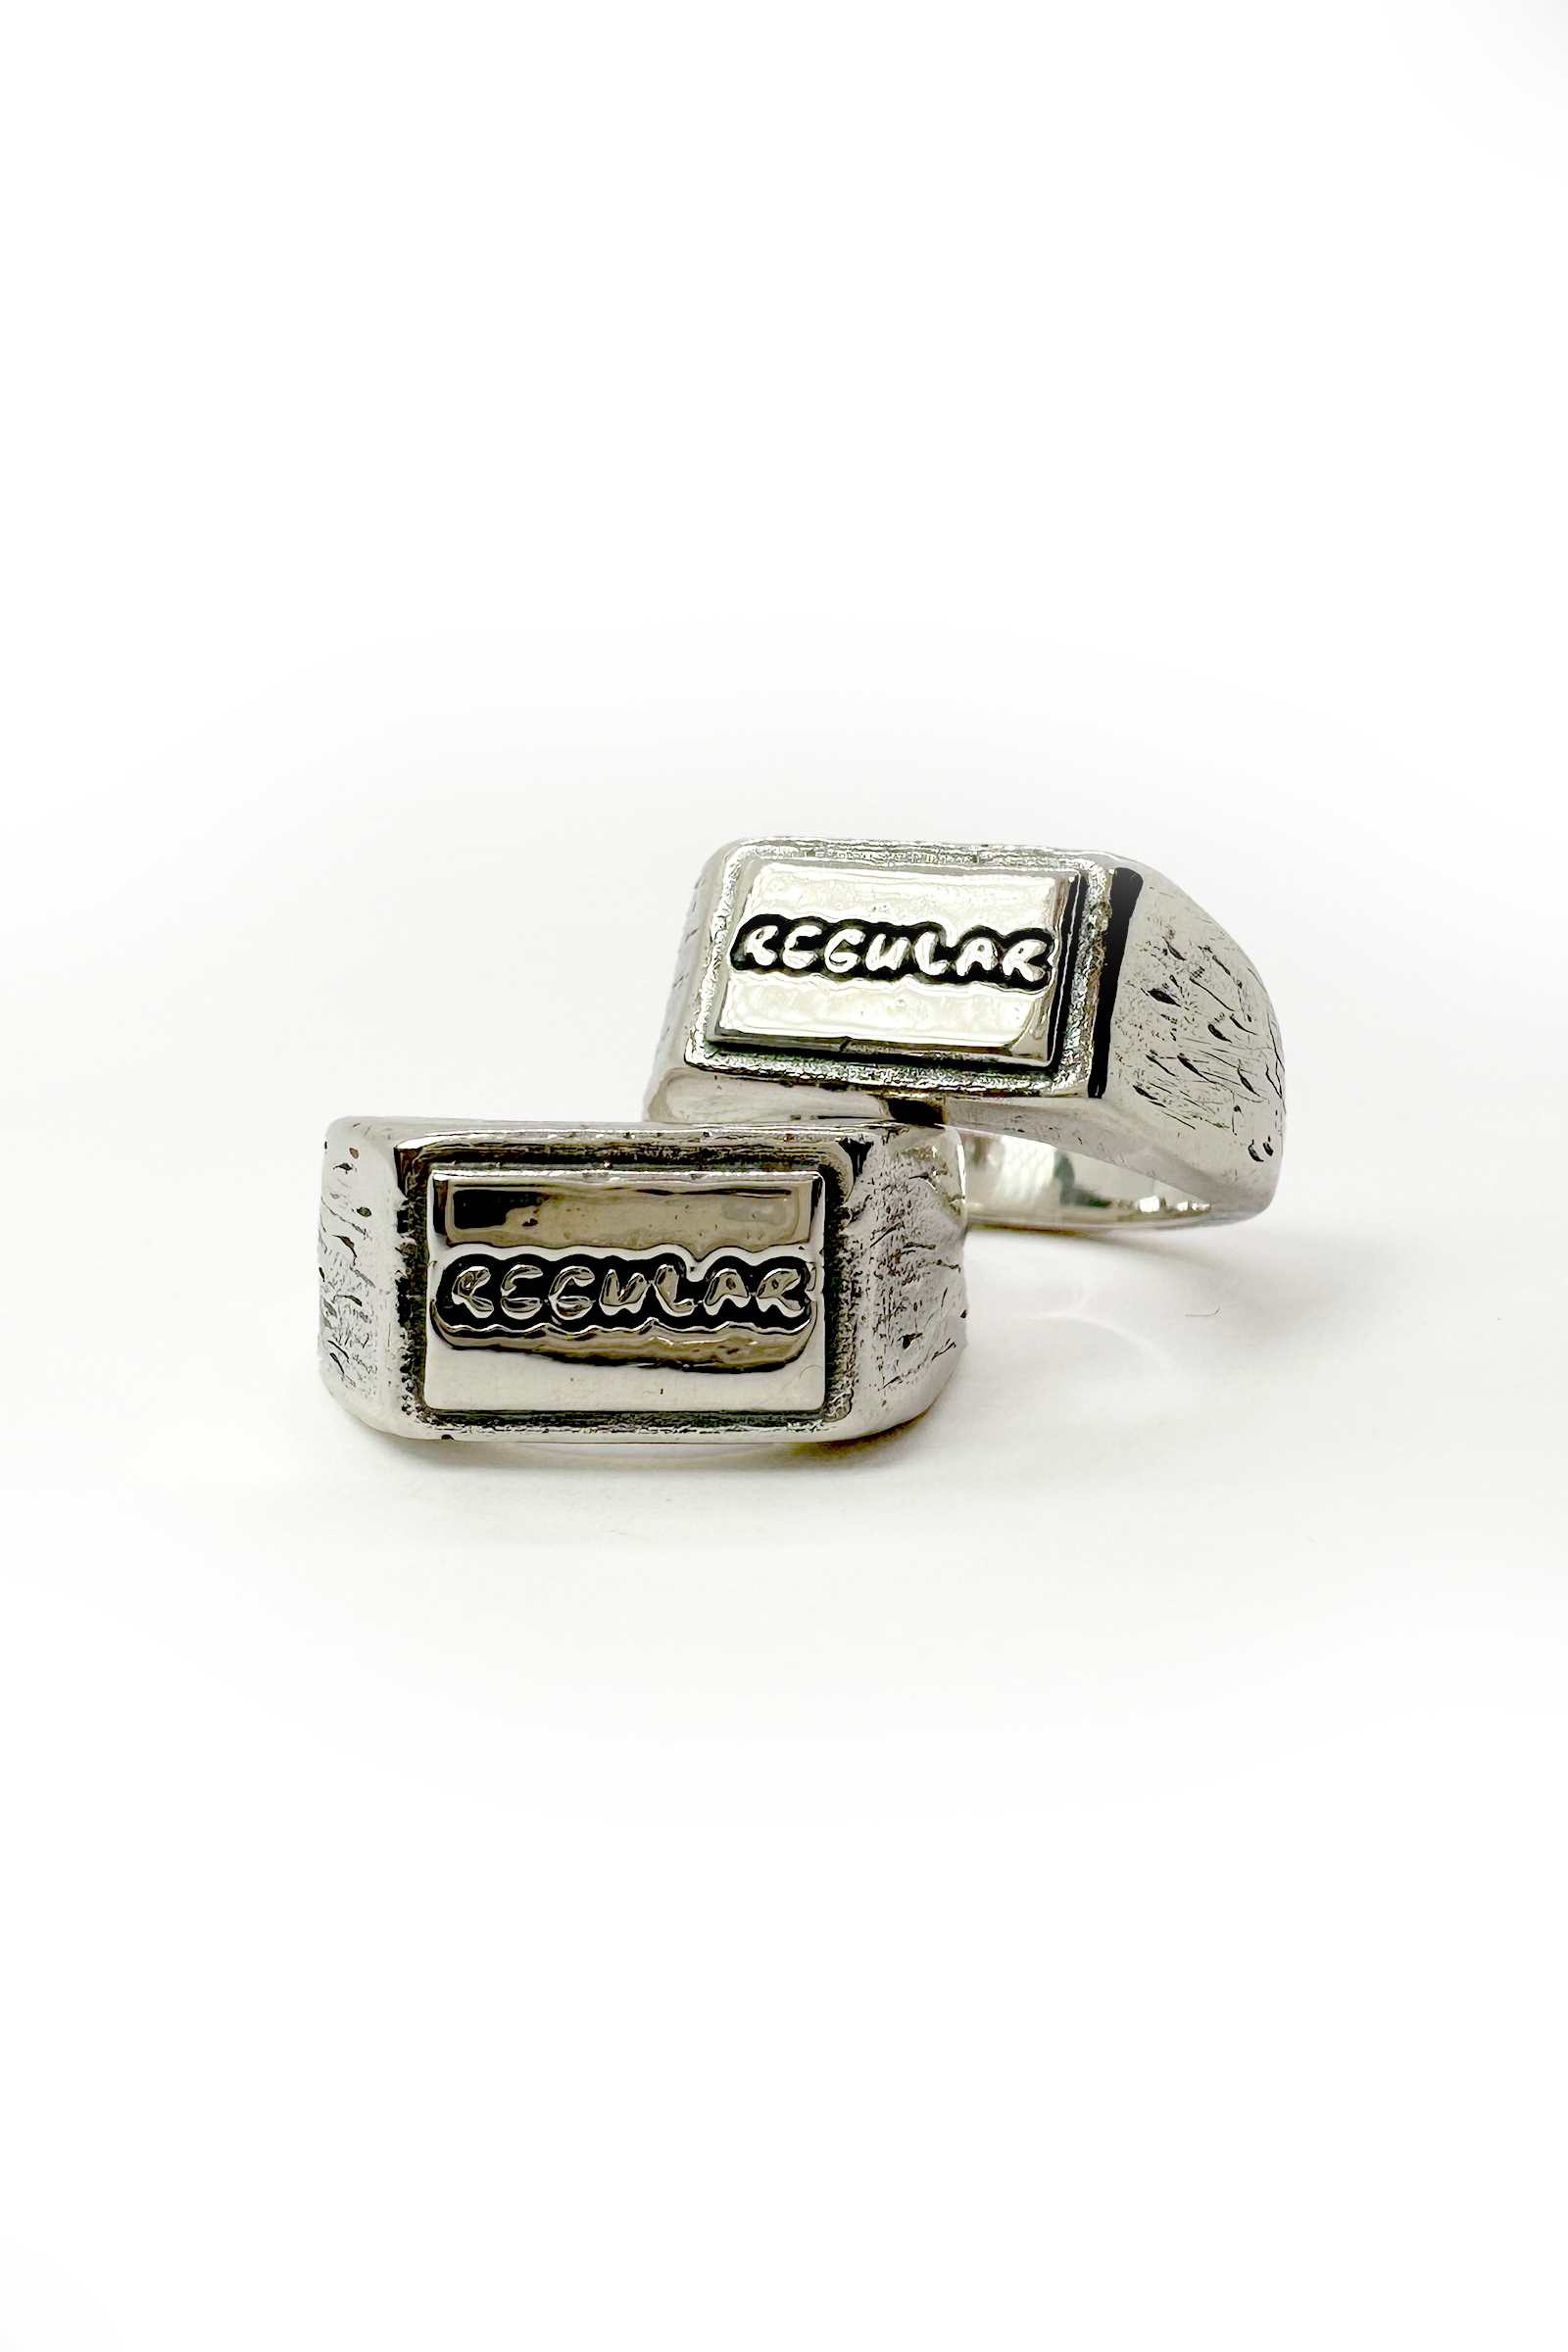 REGULAR Silver Ring - skateboarding TIMELESS jewelry I